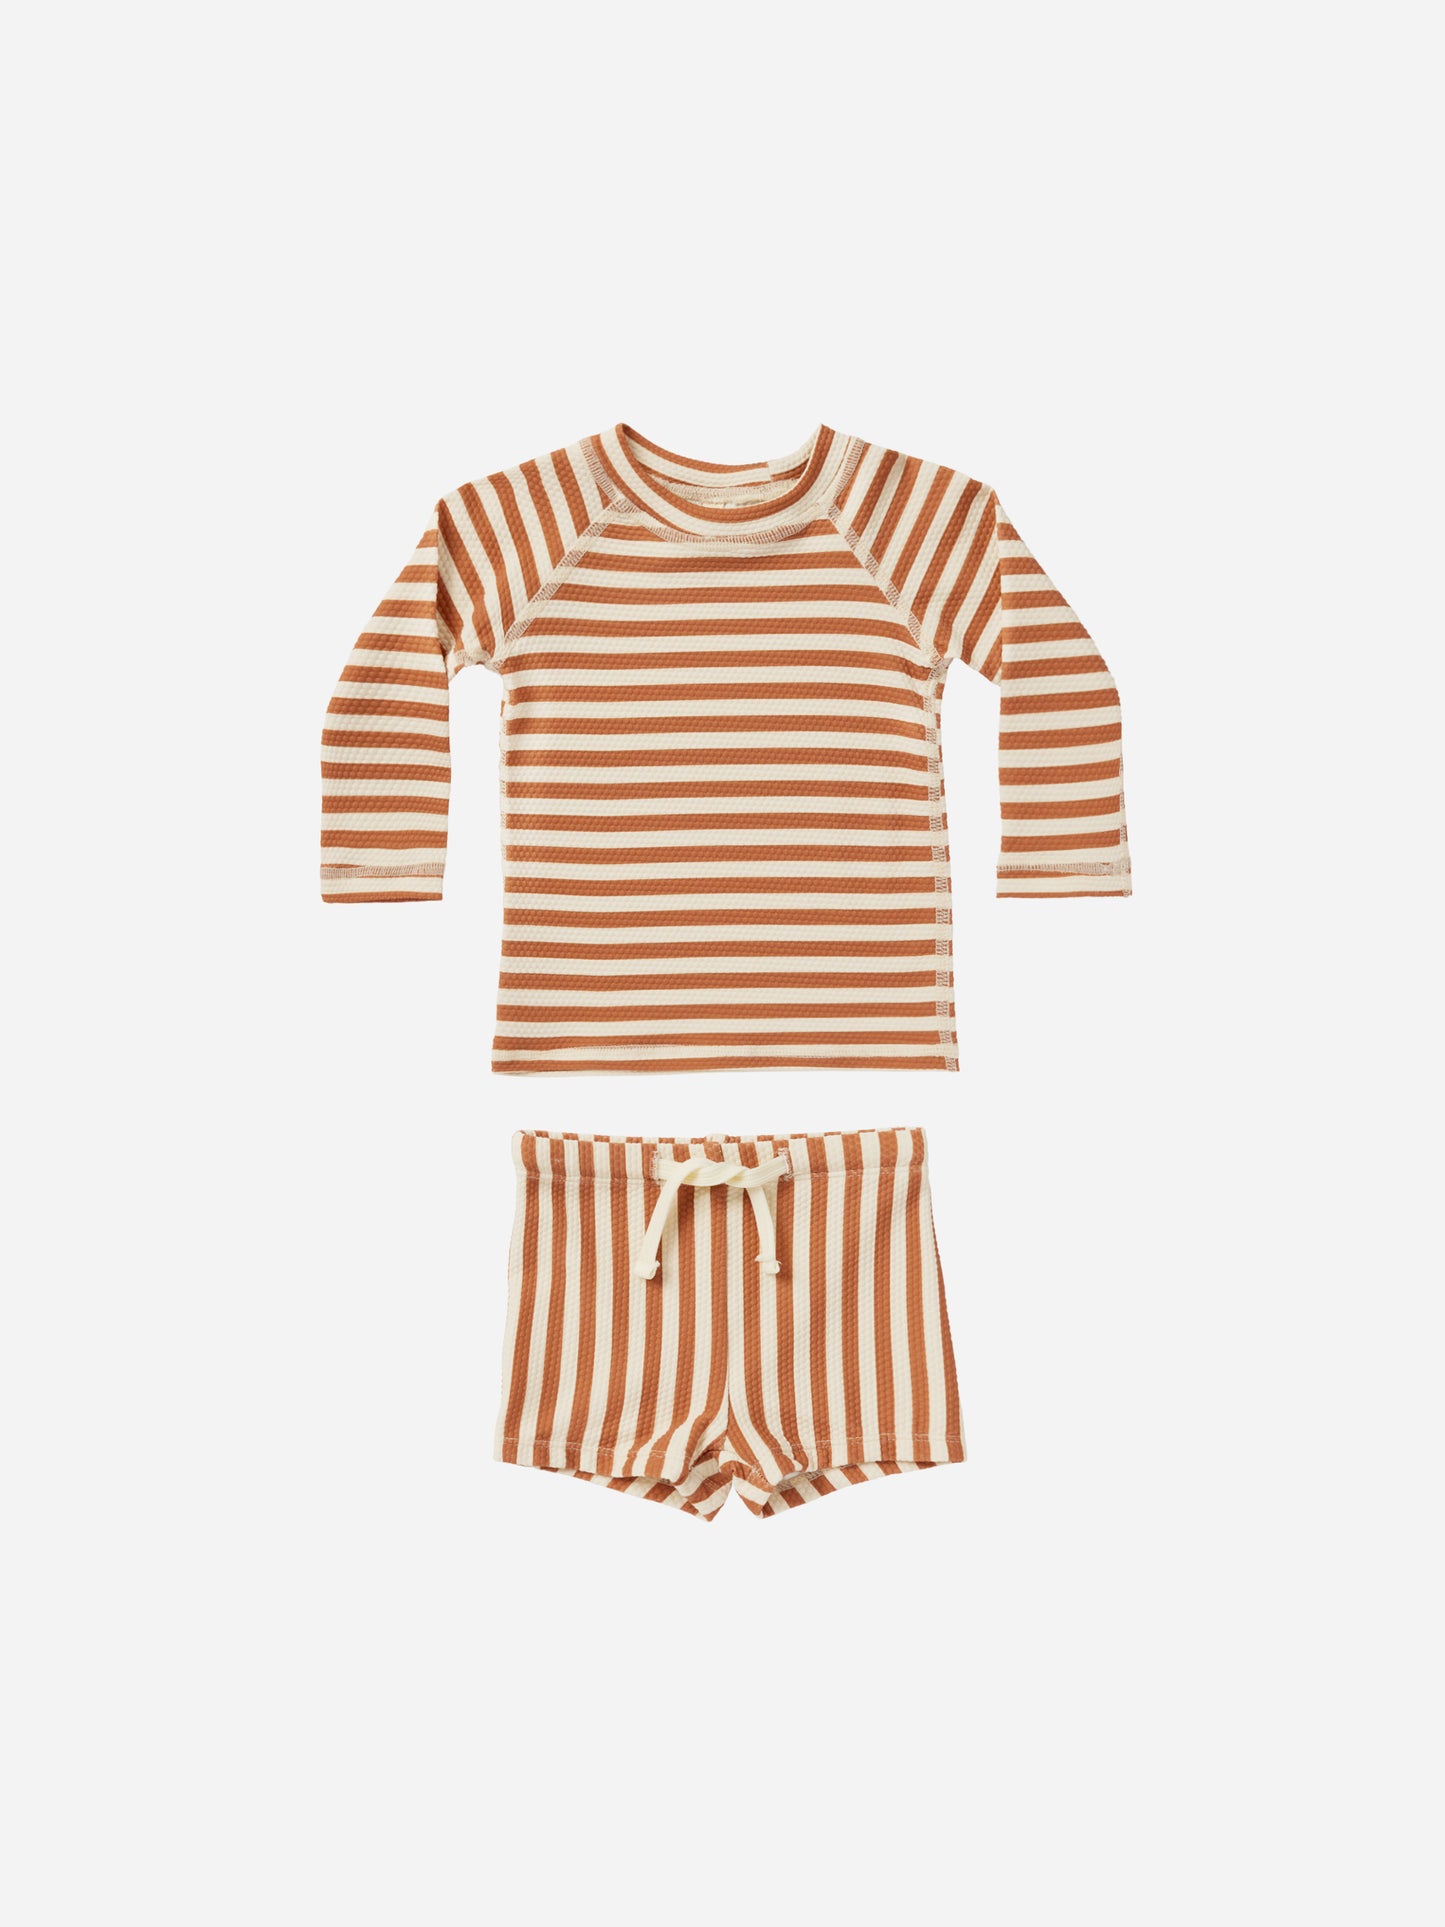 Finn Rashguard + Short Set || Clay Stripe - Rylee + Cru | Kids Clothes | Trendy Baby Clothes | Modern Infant Outfits |